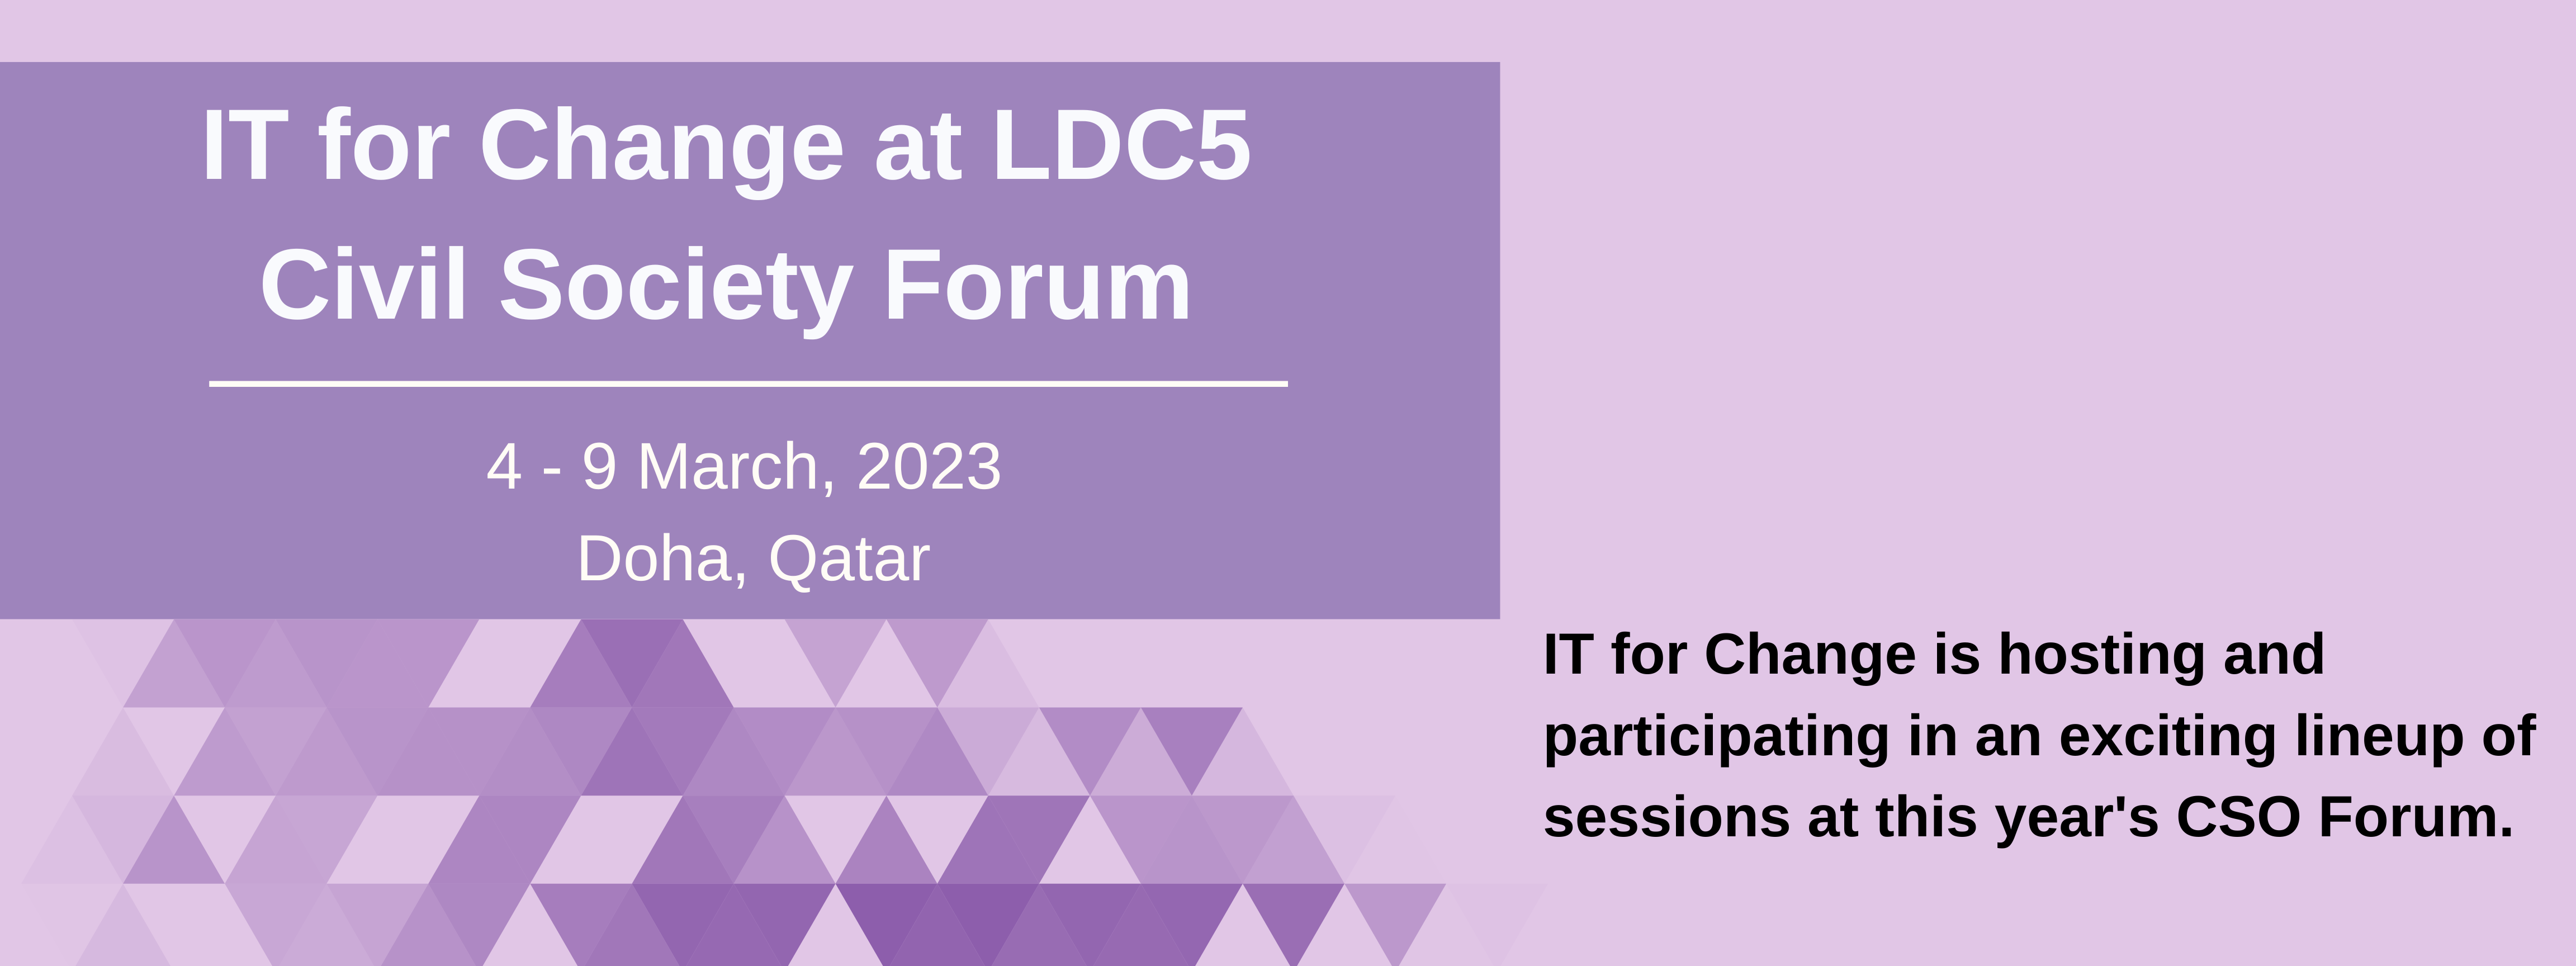 IT for Change at LDC5 Civil Society Forum